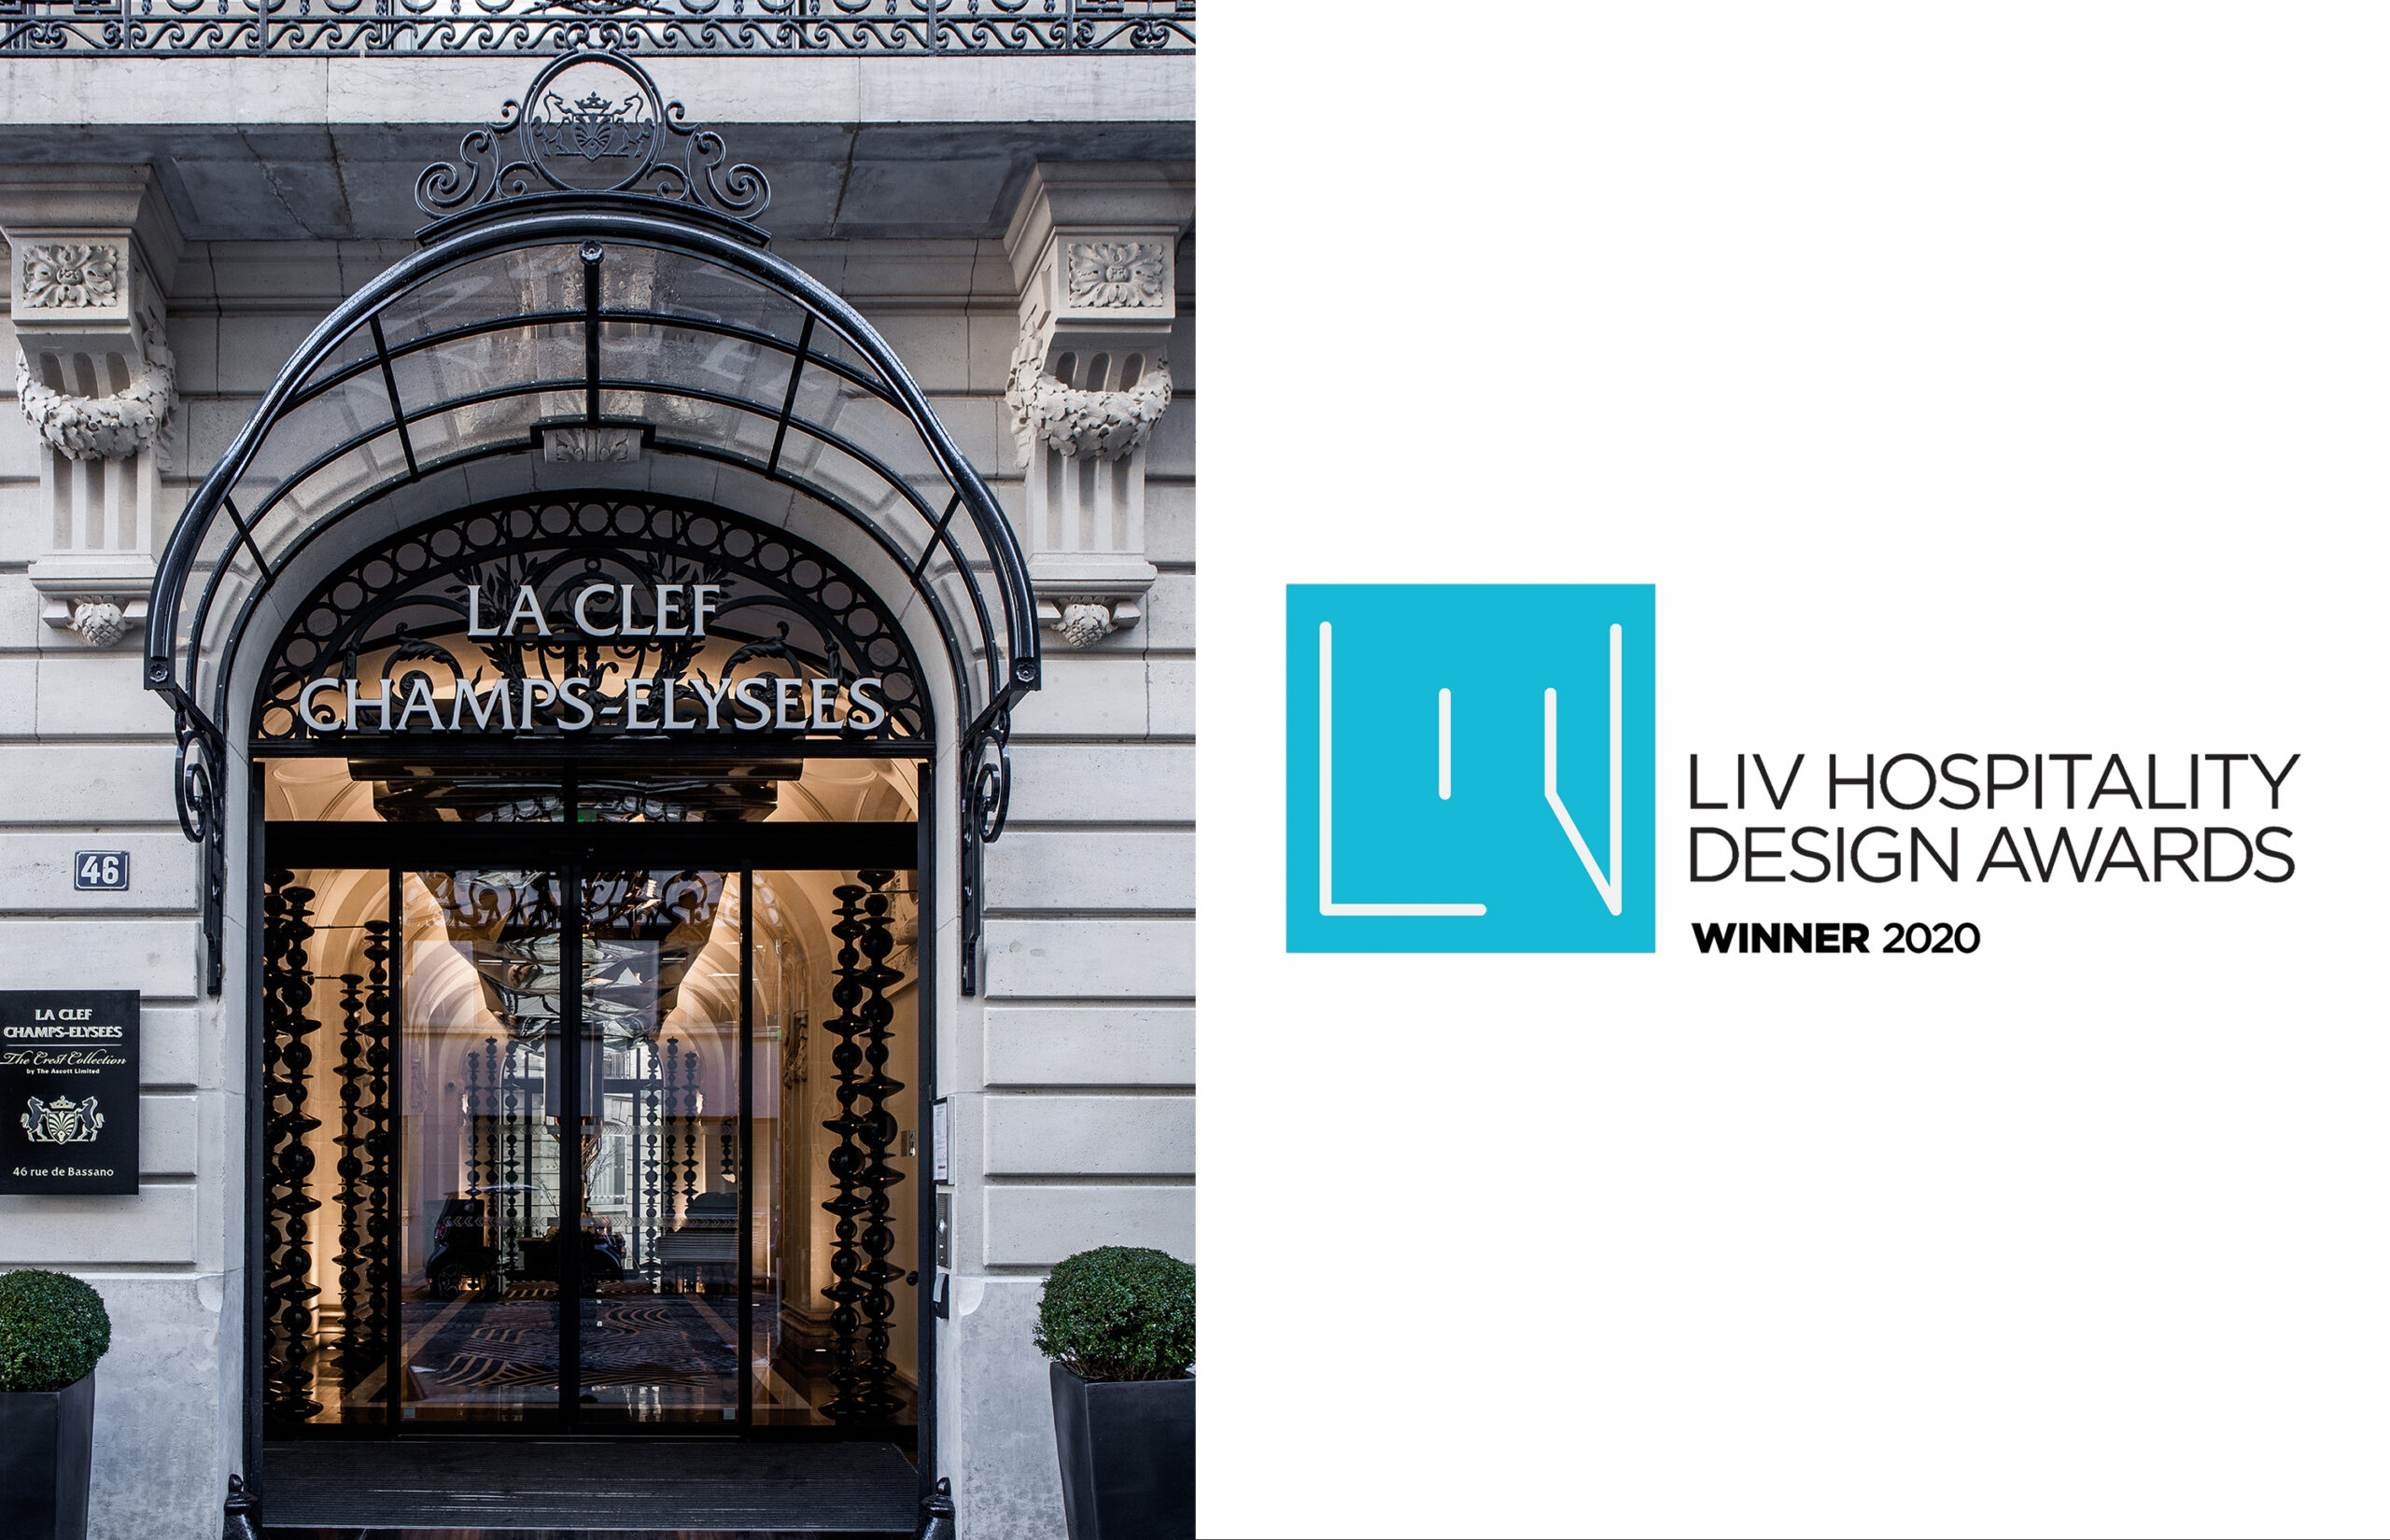 LIV Hospitality Design Awards 2020 for the hotel La Clef Champs-Elysées Paris designed by the interior design studio jean-philippe nuel